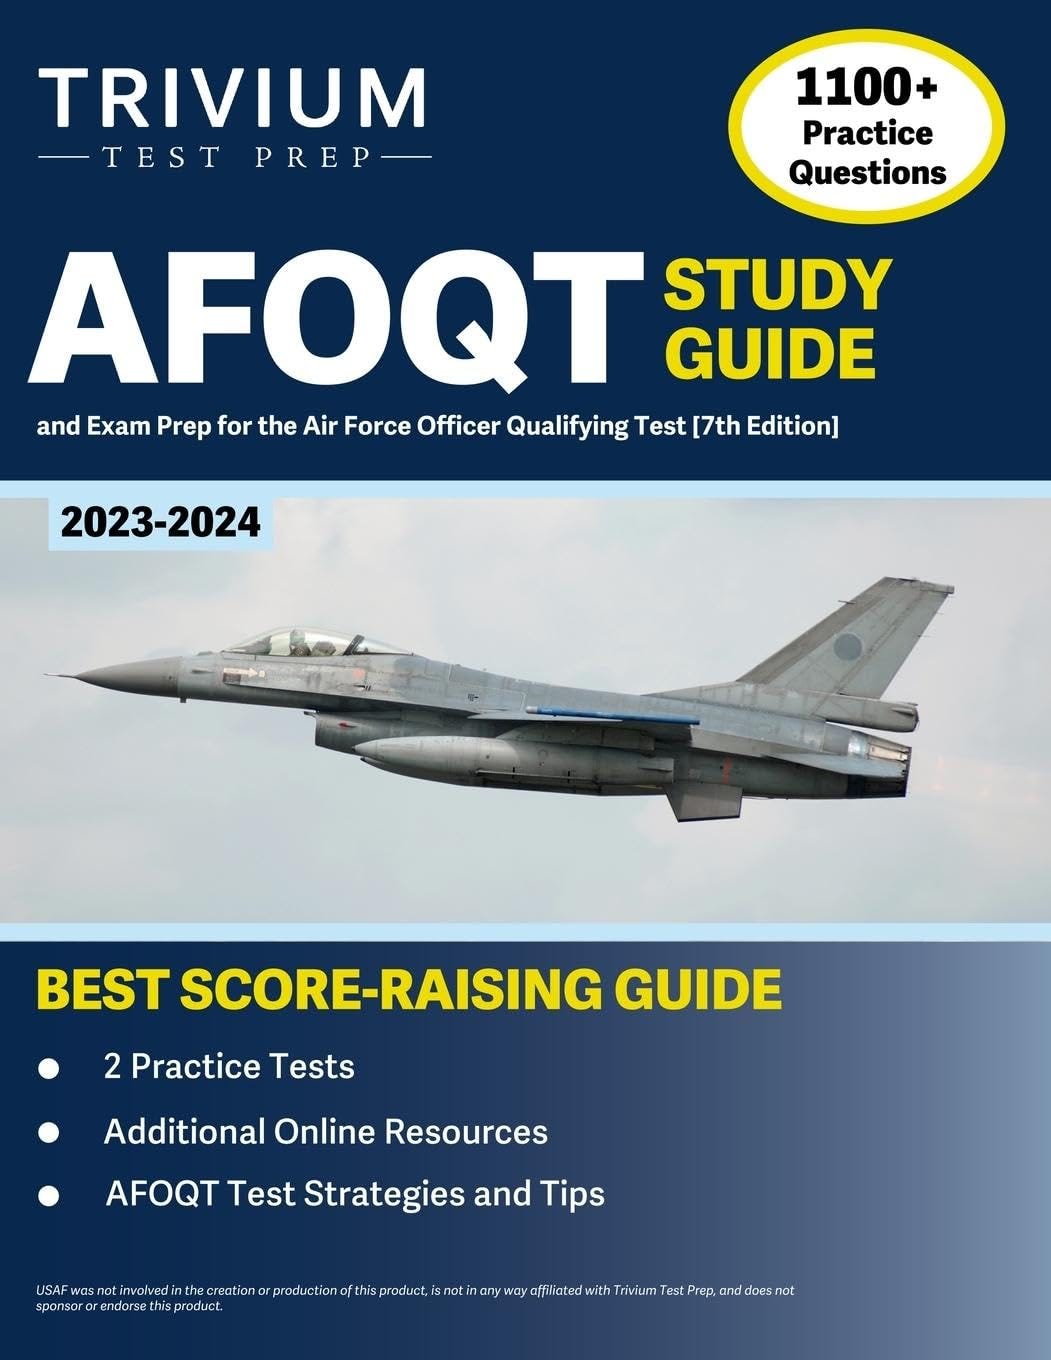 [DOWNLOAD][BEST]} AFOQT Study Guide 20232024 1,100+ Practice